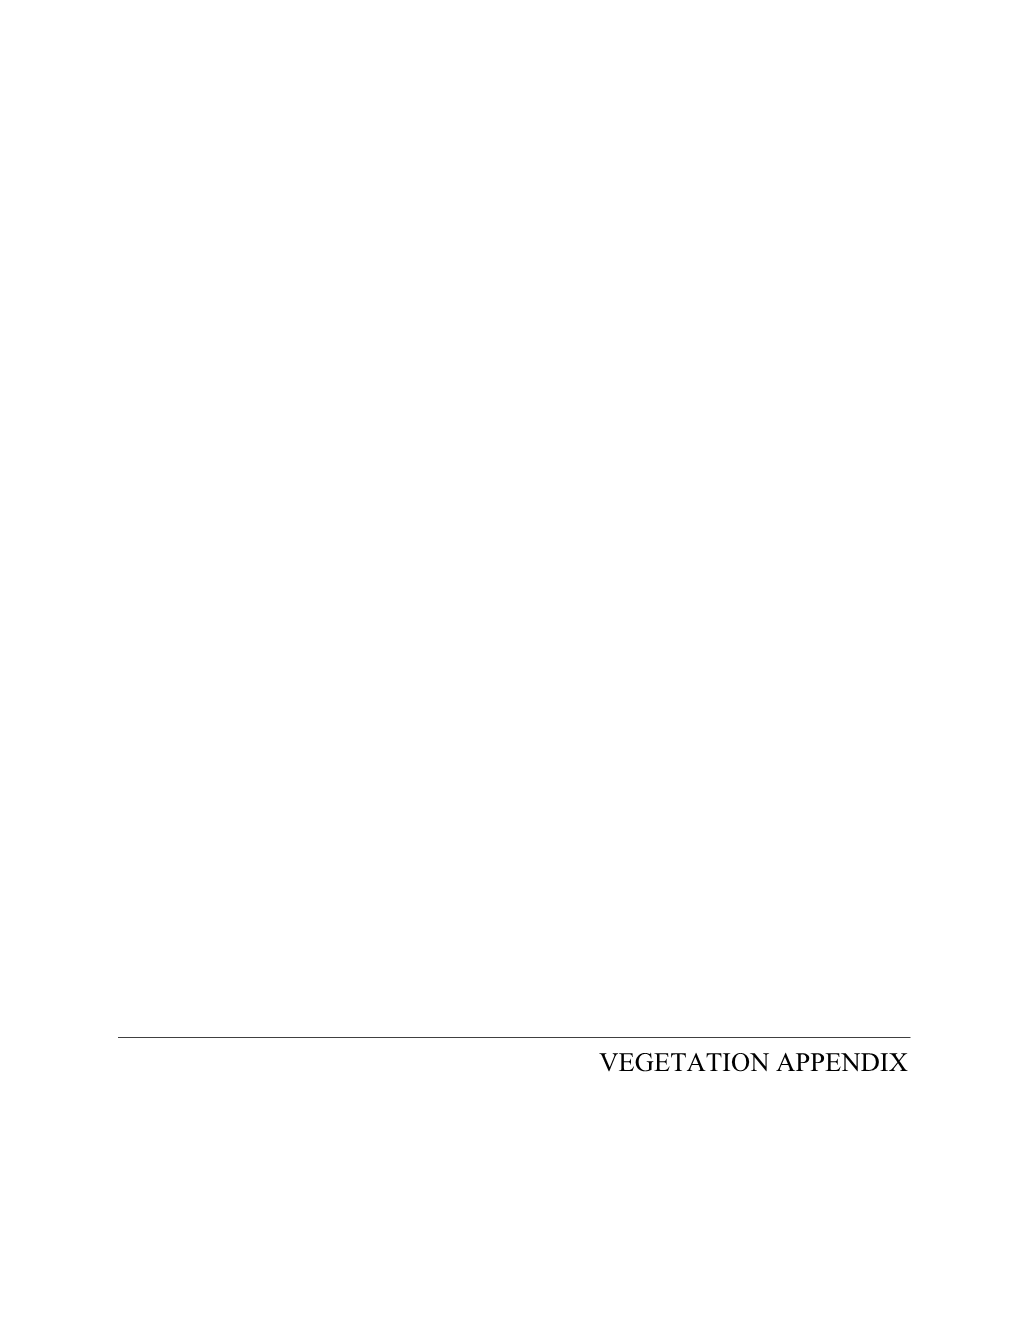 Vegetation Appendix